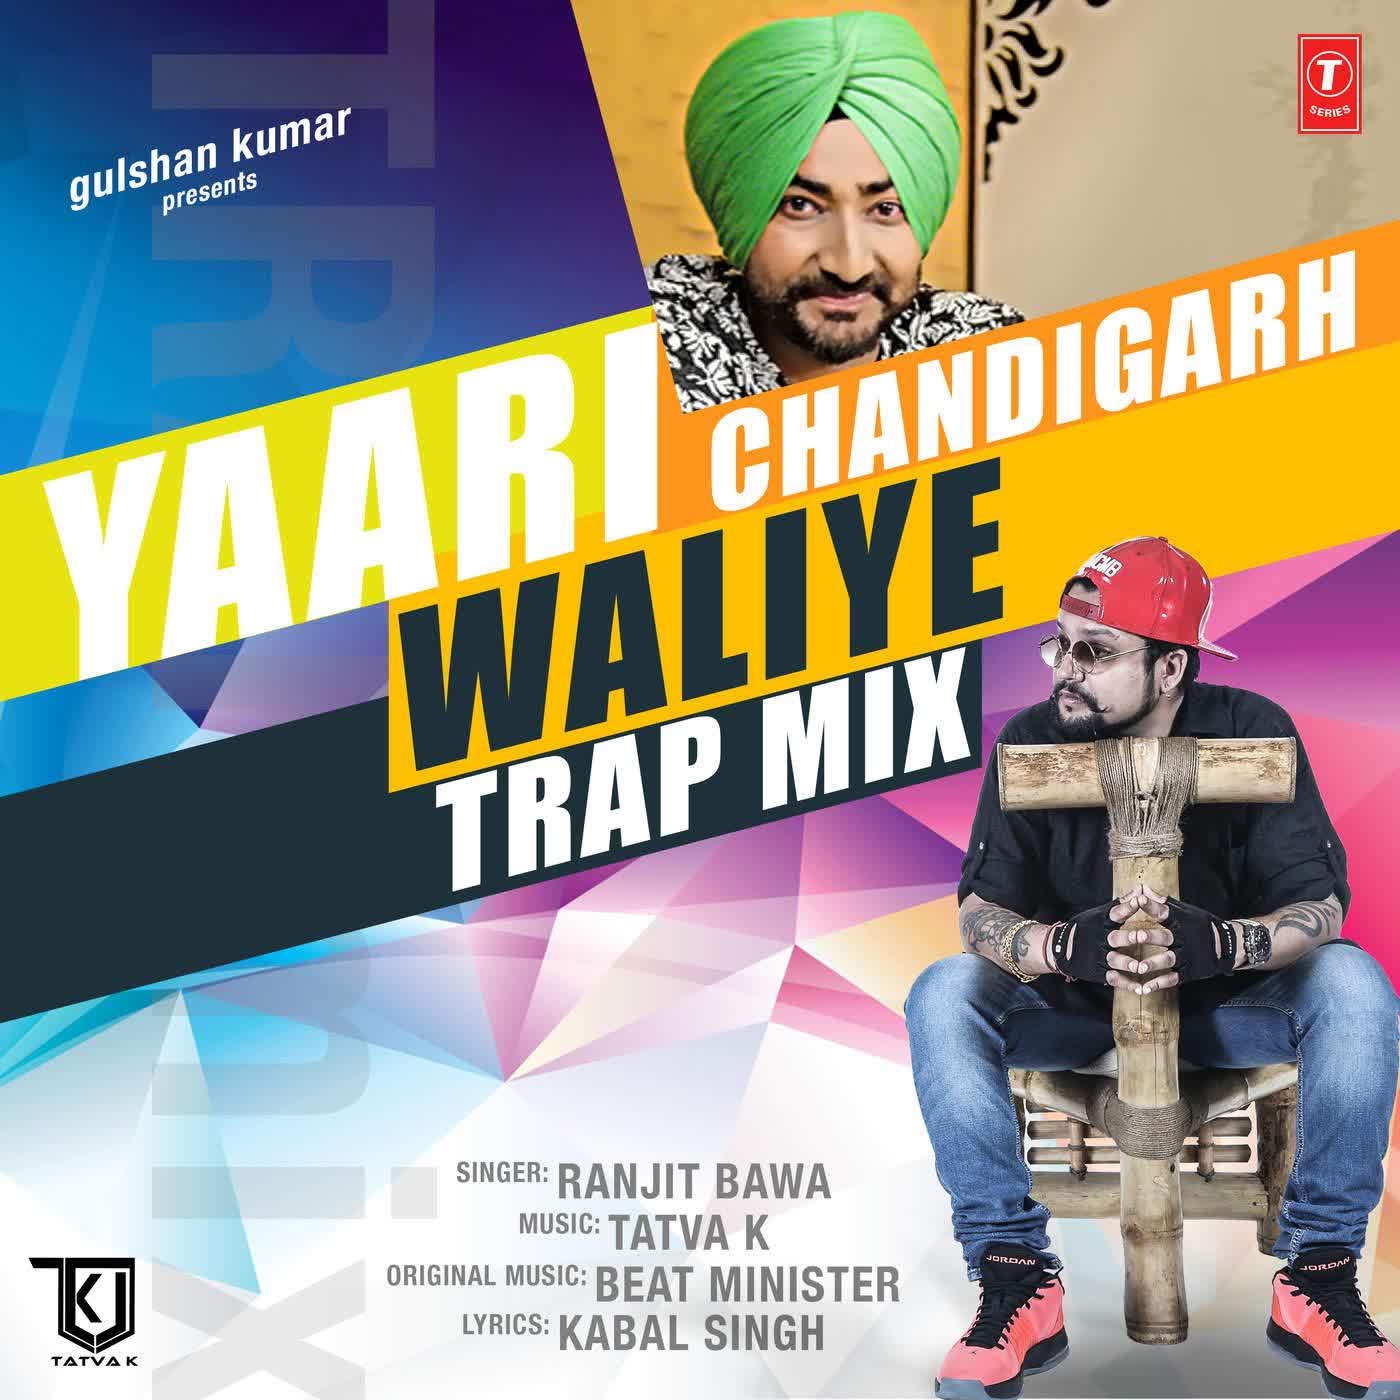 Yaari Chandigarh Waliye (Trap Mix) Ranjit Bawa  Mp3 song download